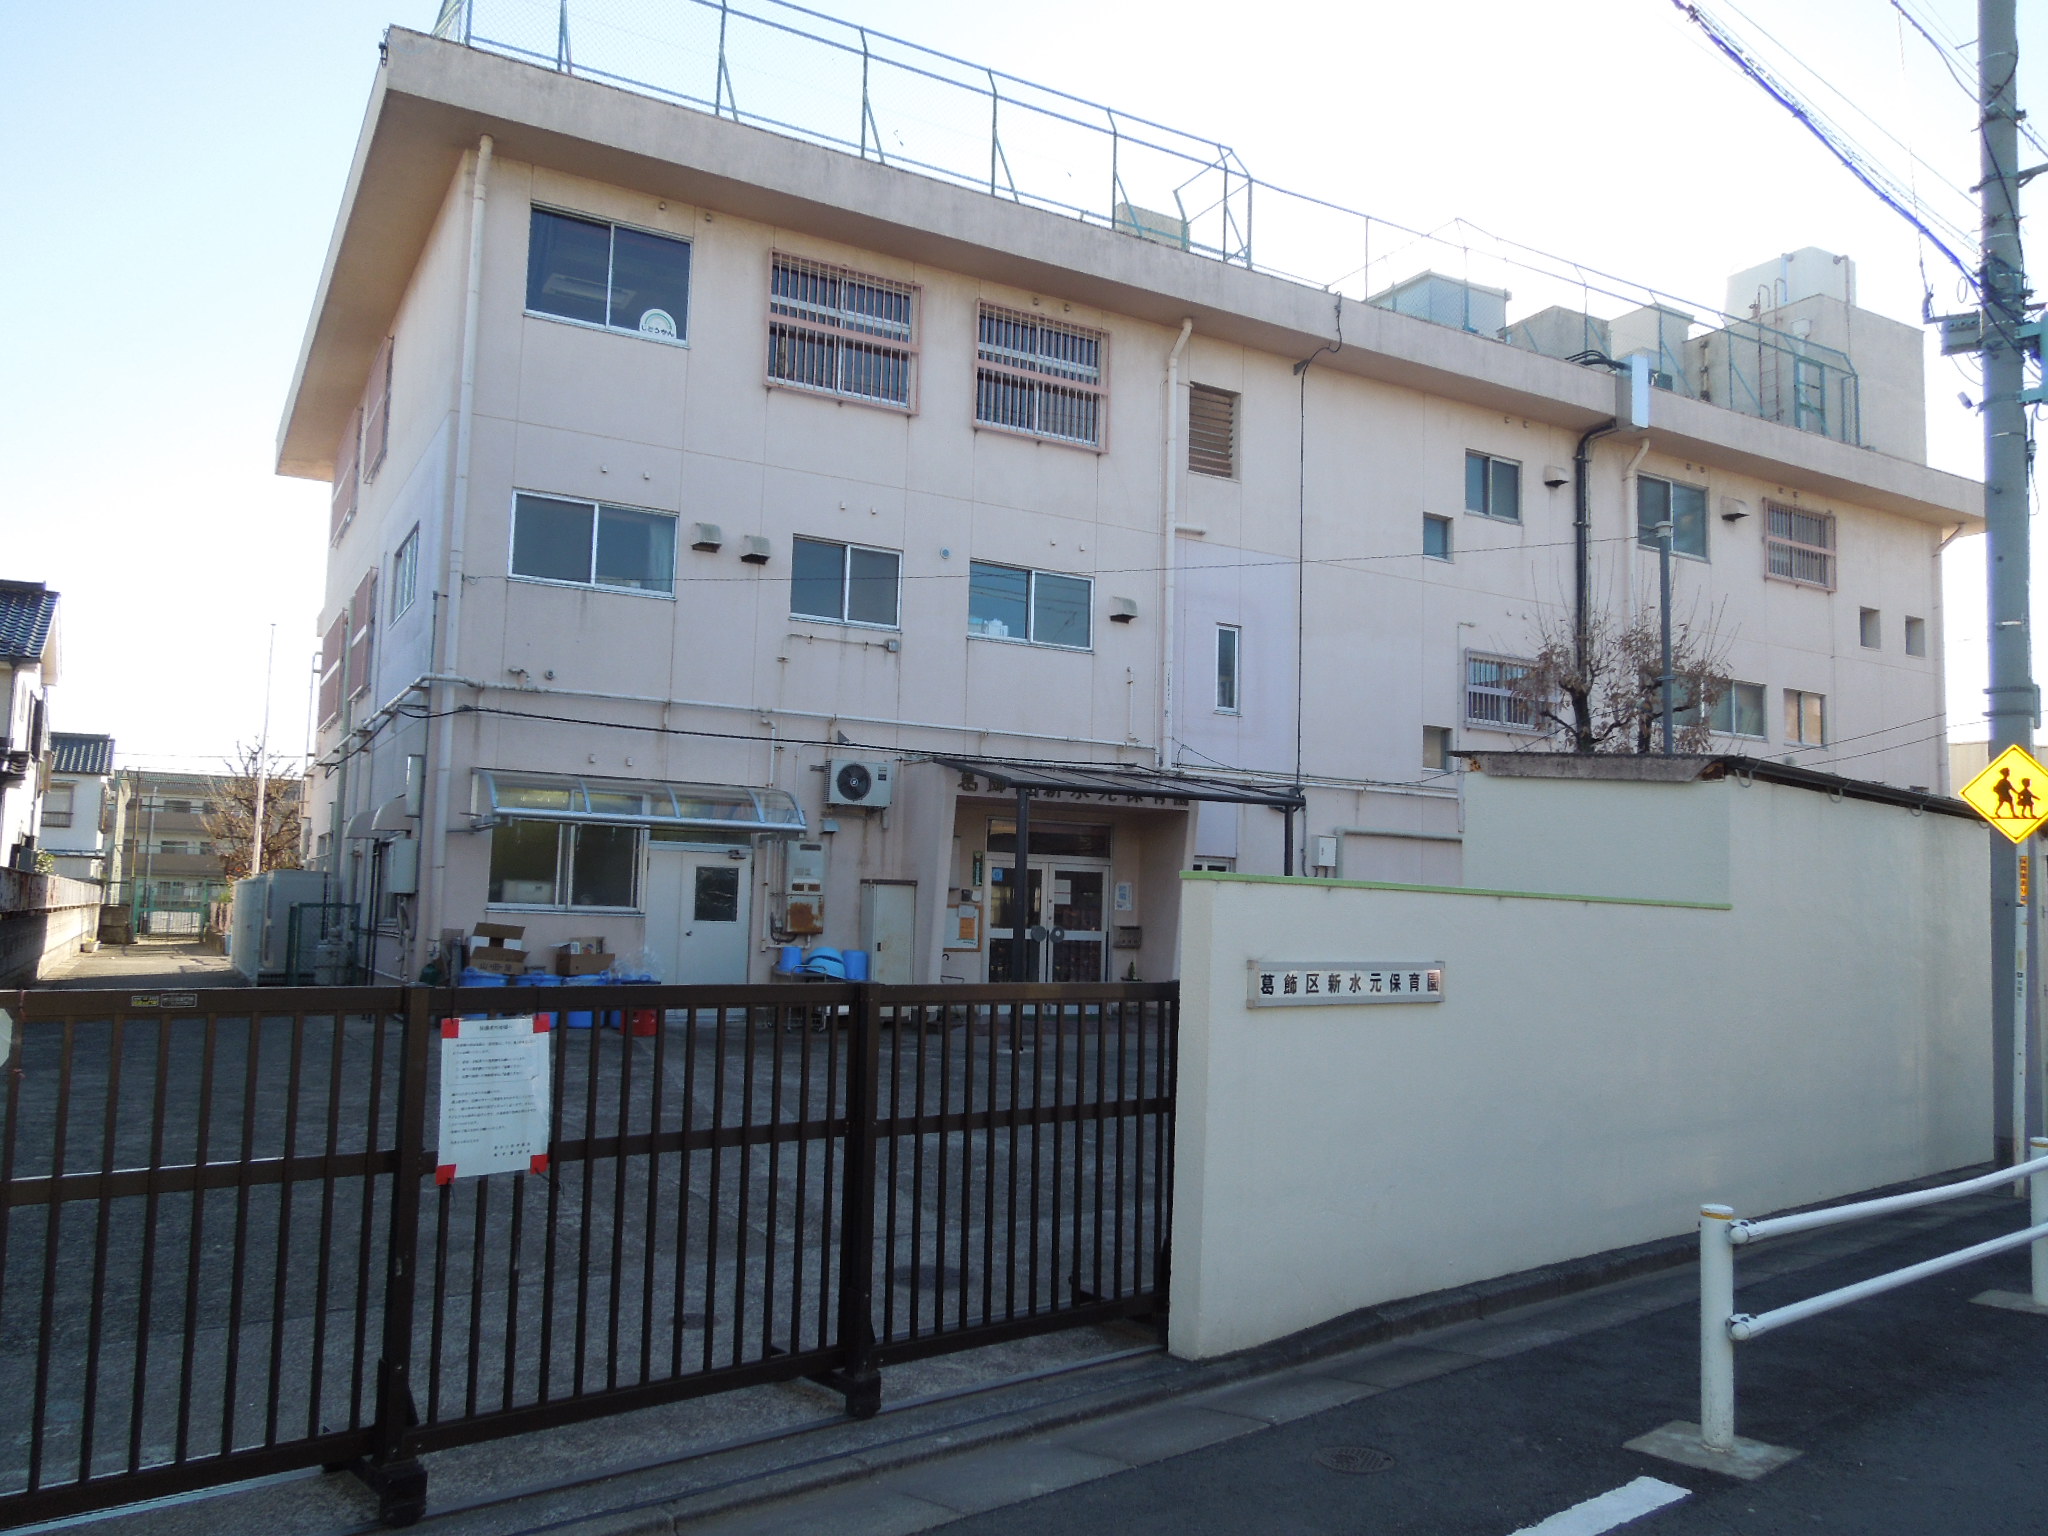 kindergarten ・ Nursery. New fountain nursery school (kindergarten ・ 300m to the nursery)